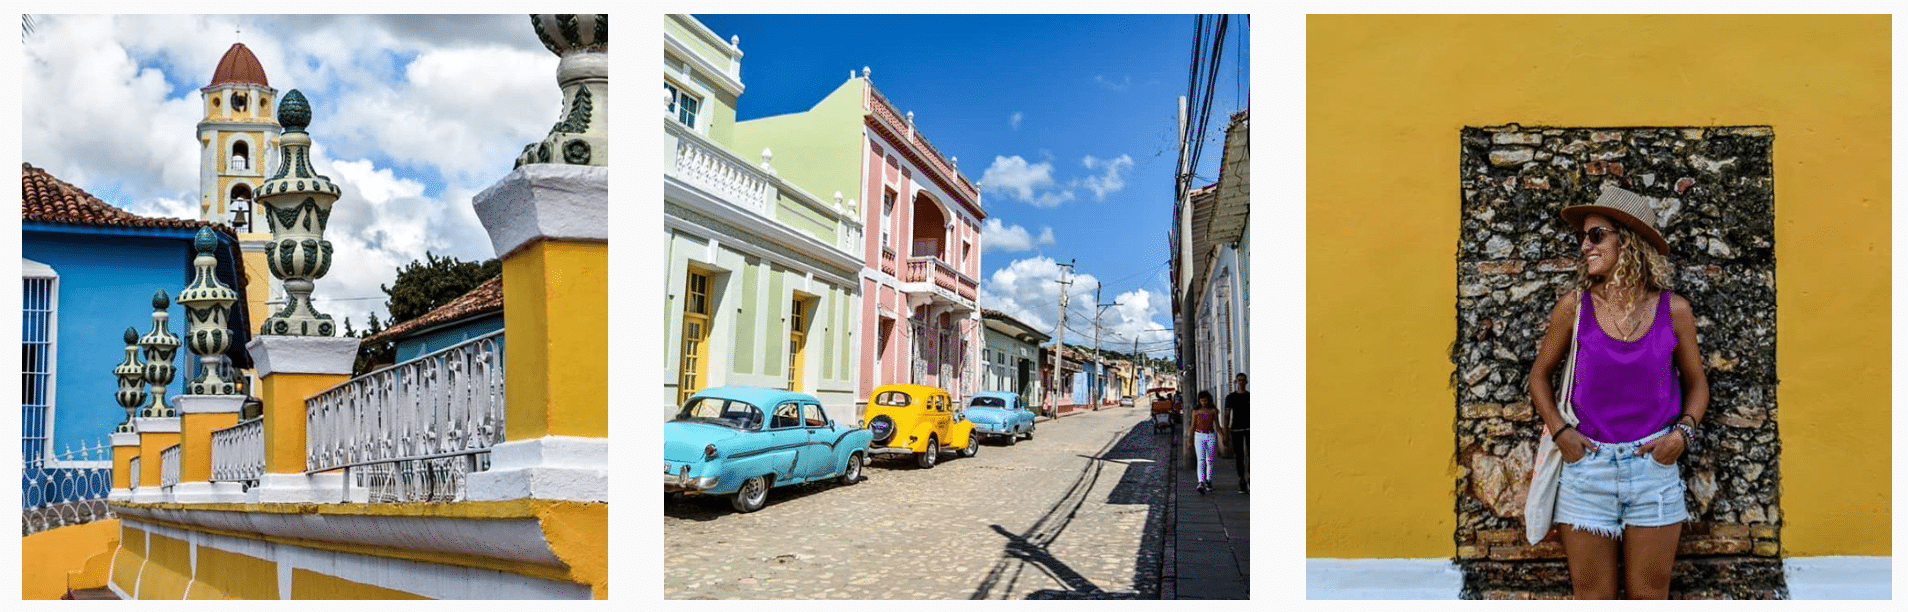 Drei Postkartenlandschaften, aufgenommen in Kuba